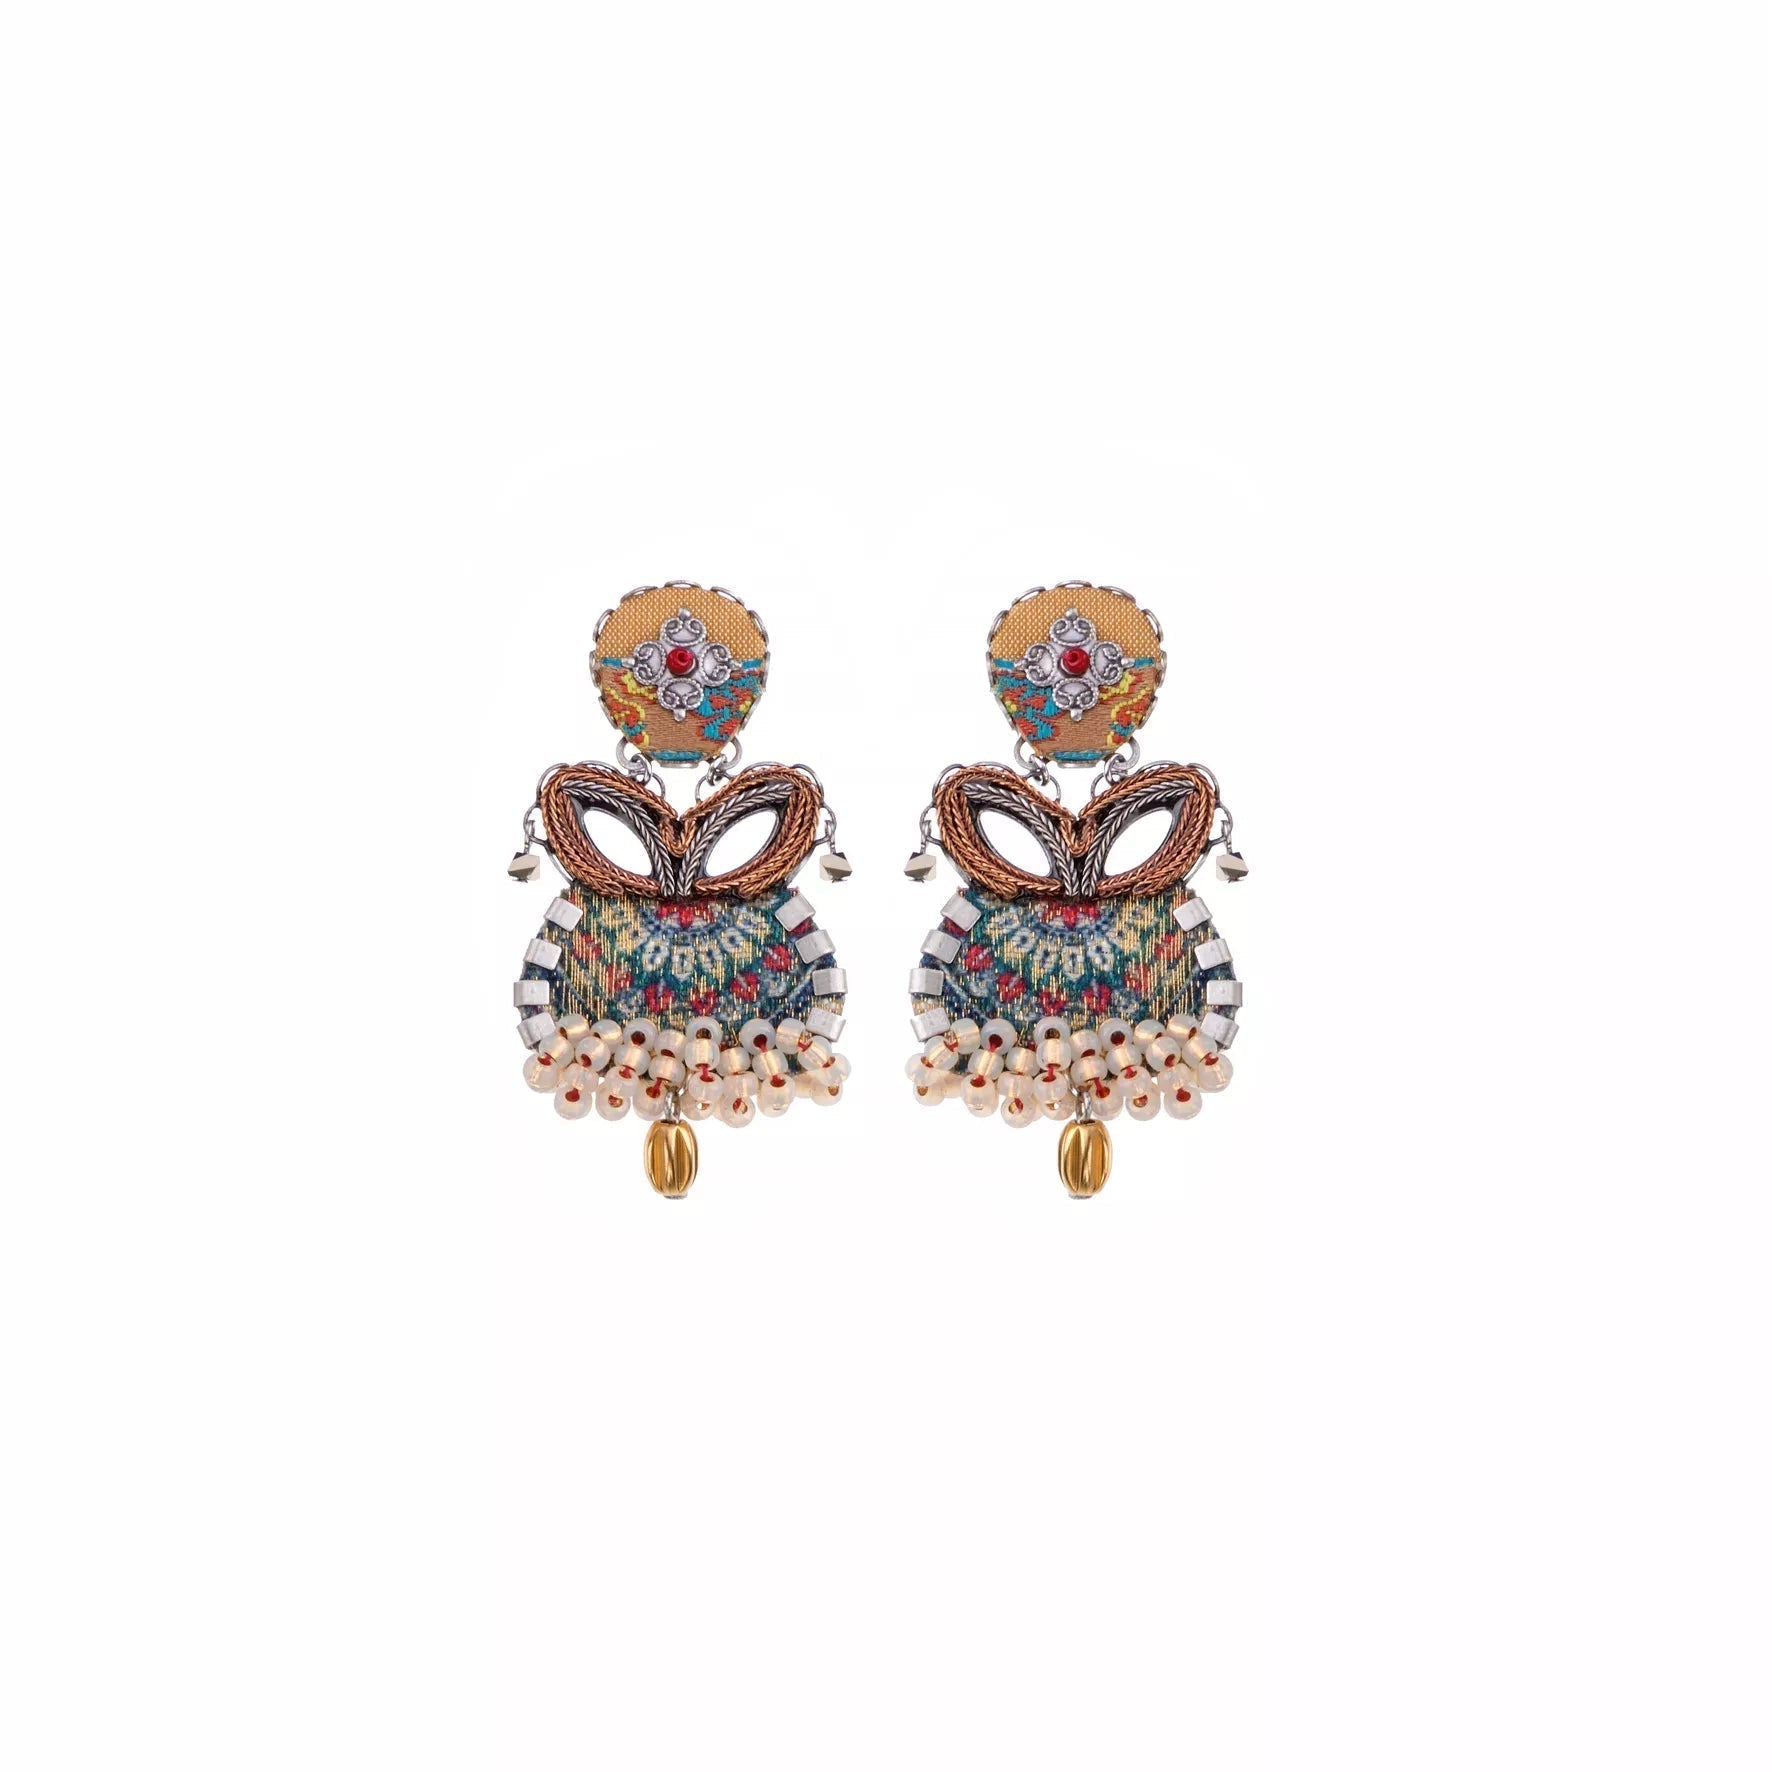 Champagne Pari Earrings - The Nancy Smillie Shop - Art, Jewellery & Designer Gifts Glasgow